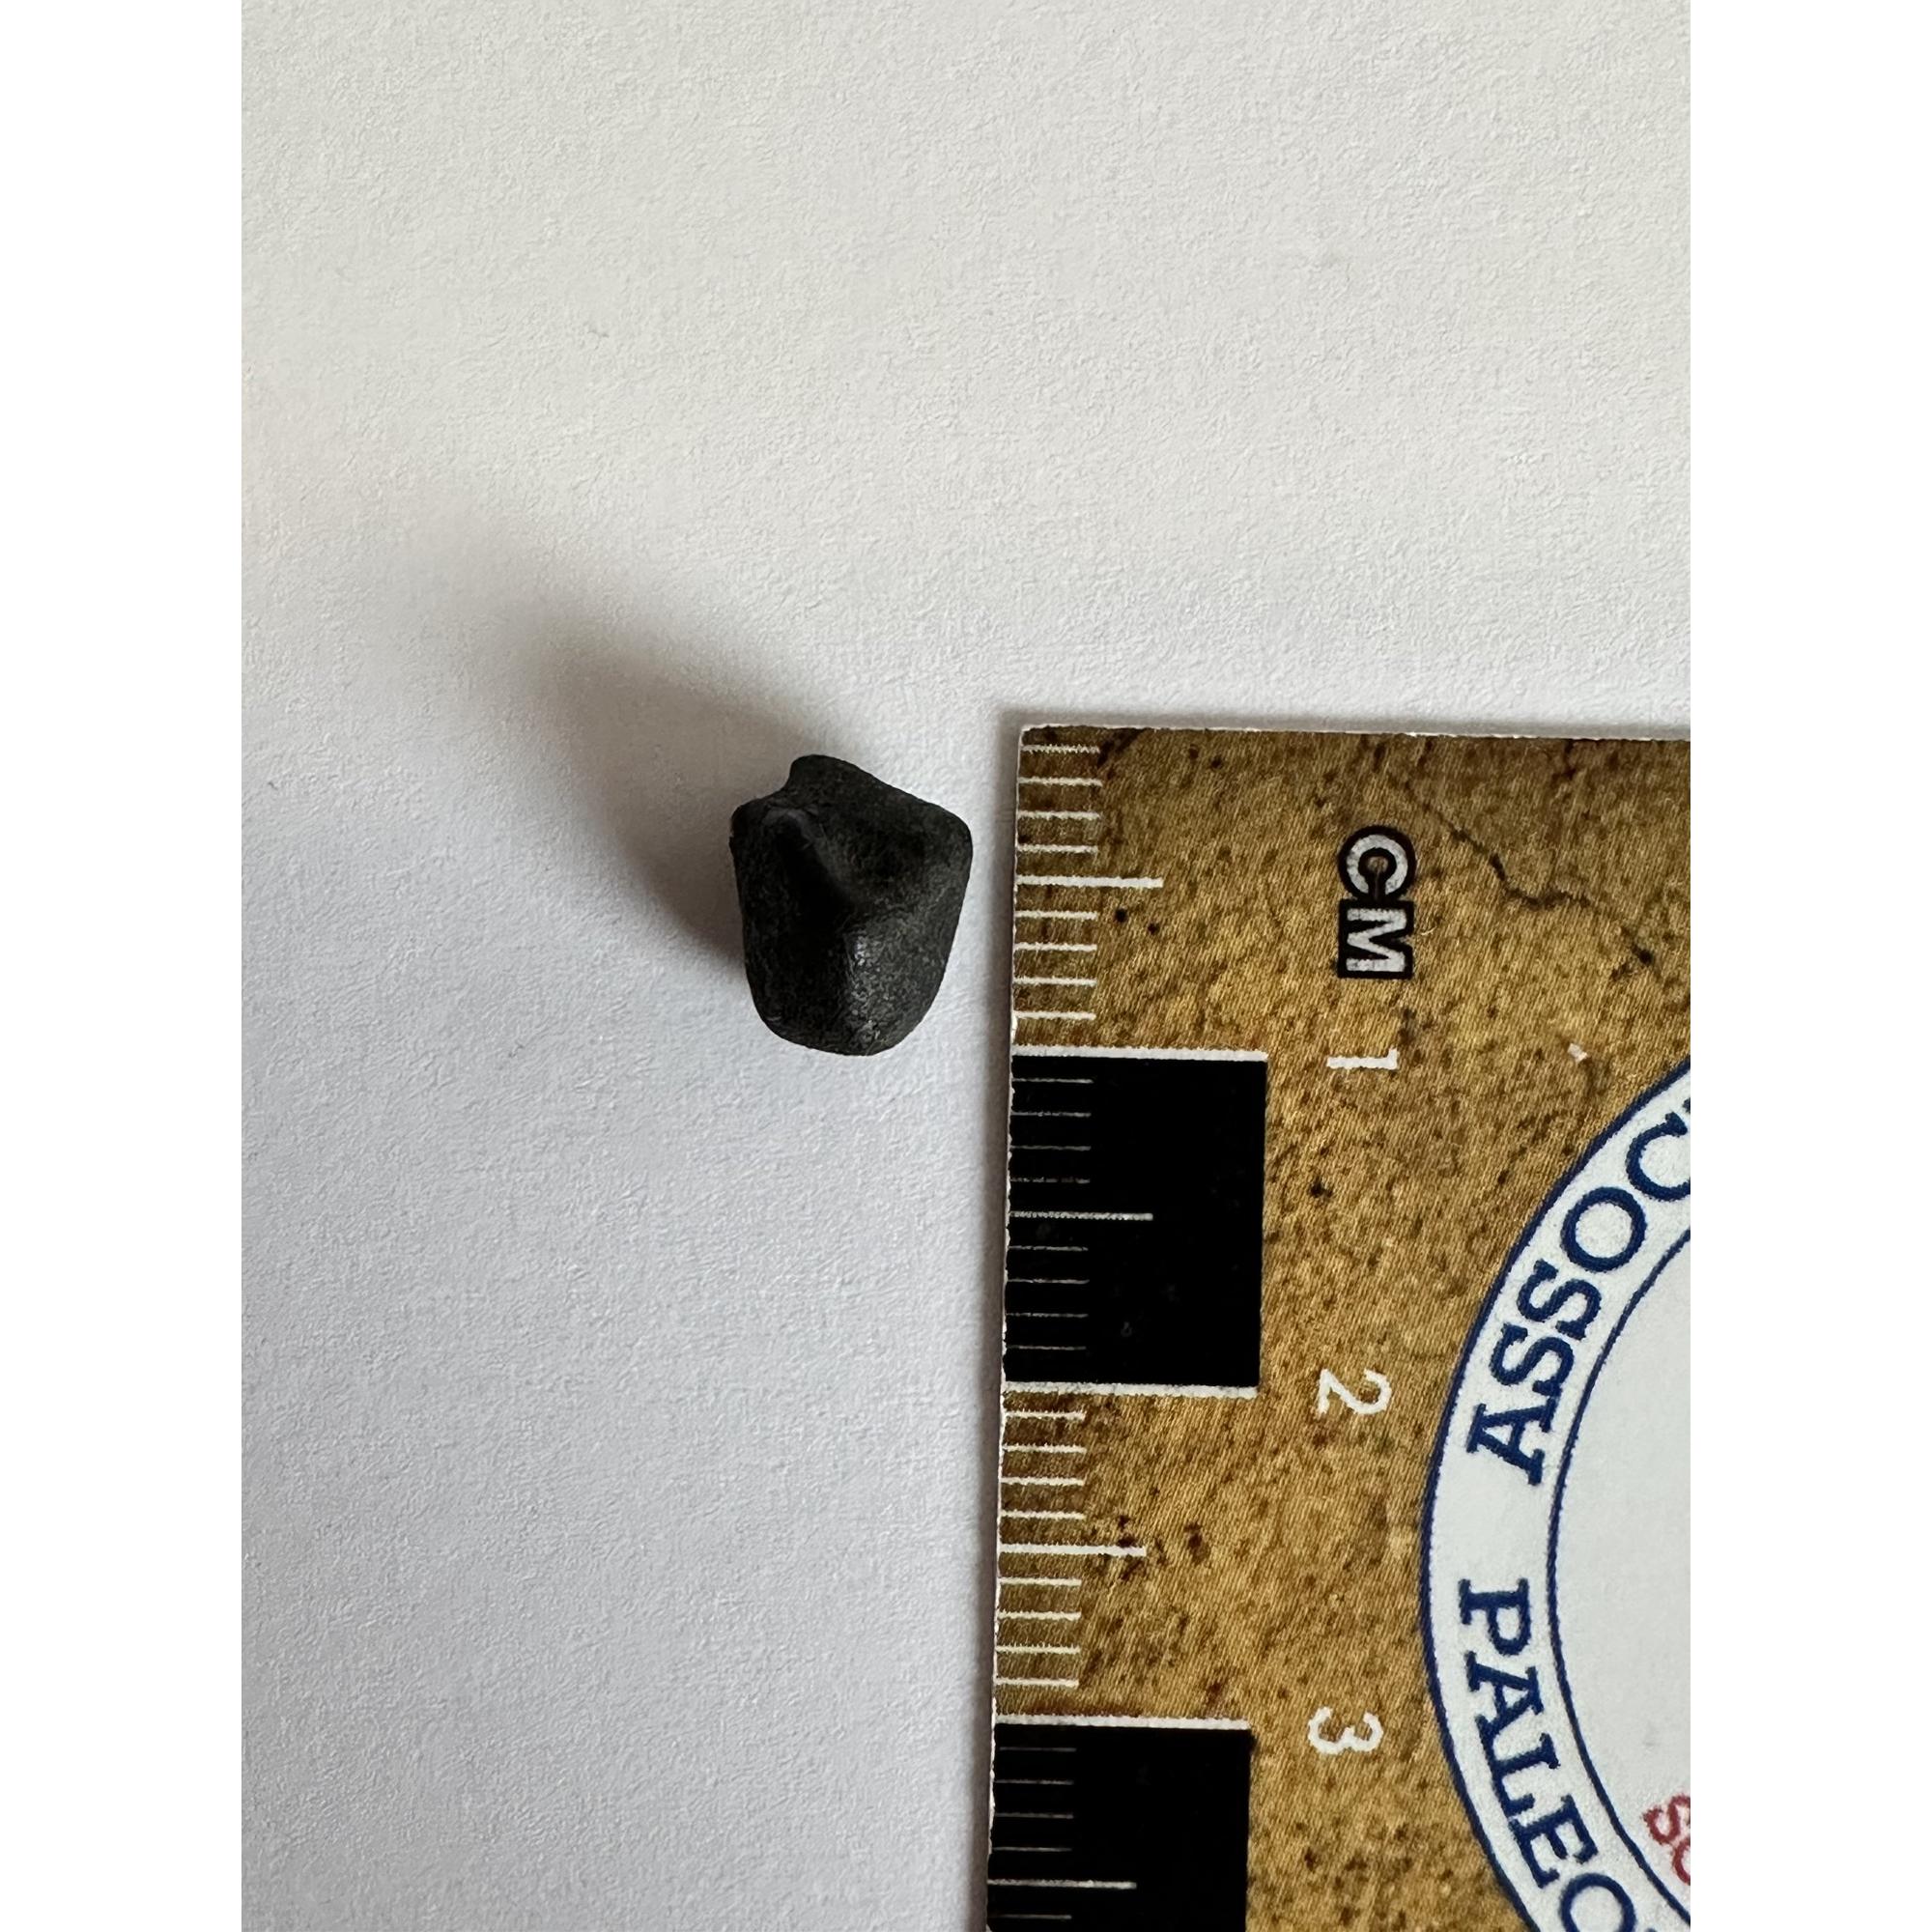 Chelyabinsk Meteorite, 0.63 grams Prehistoric Online